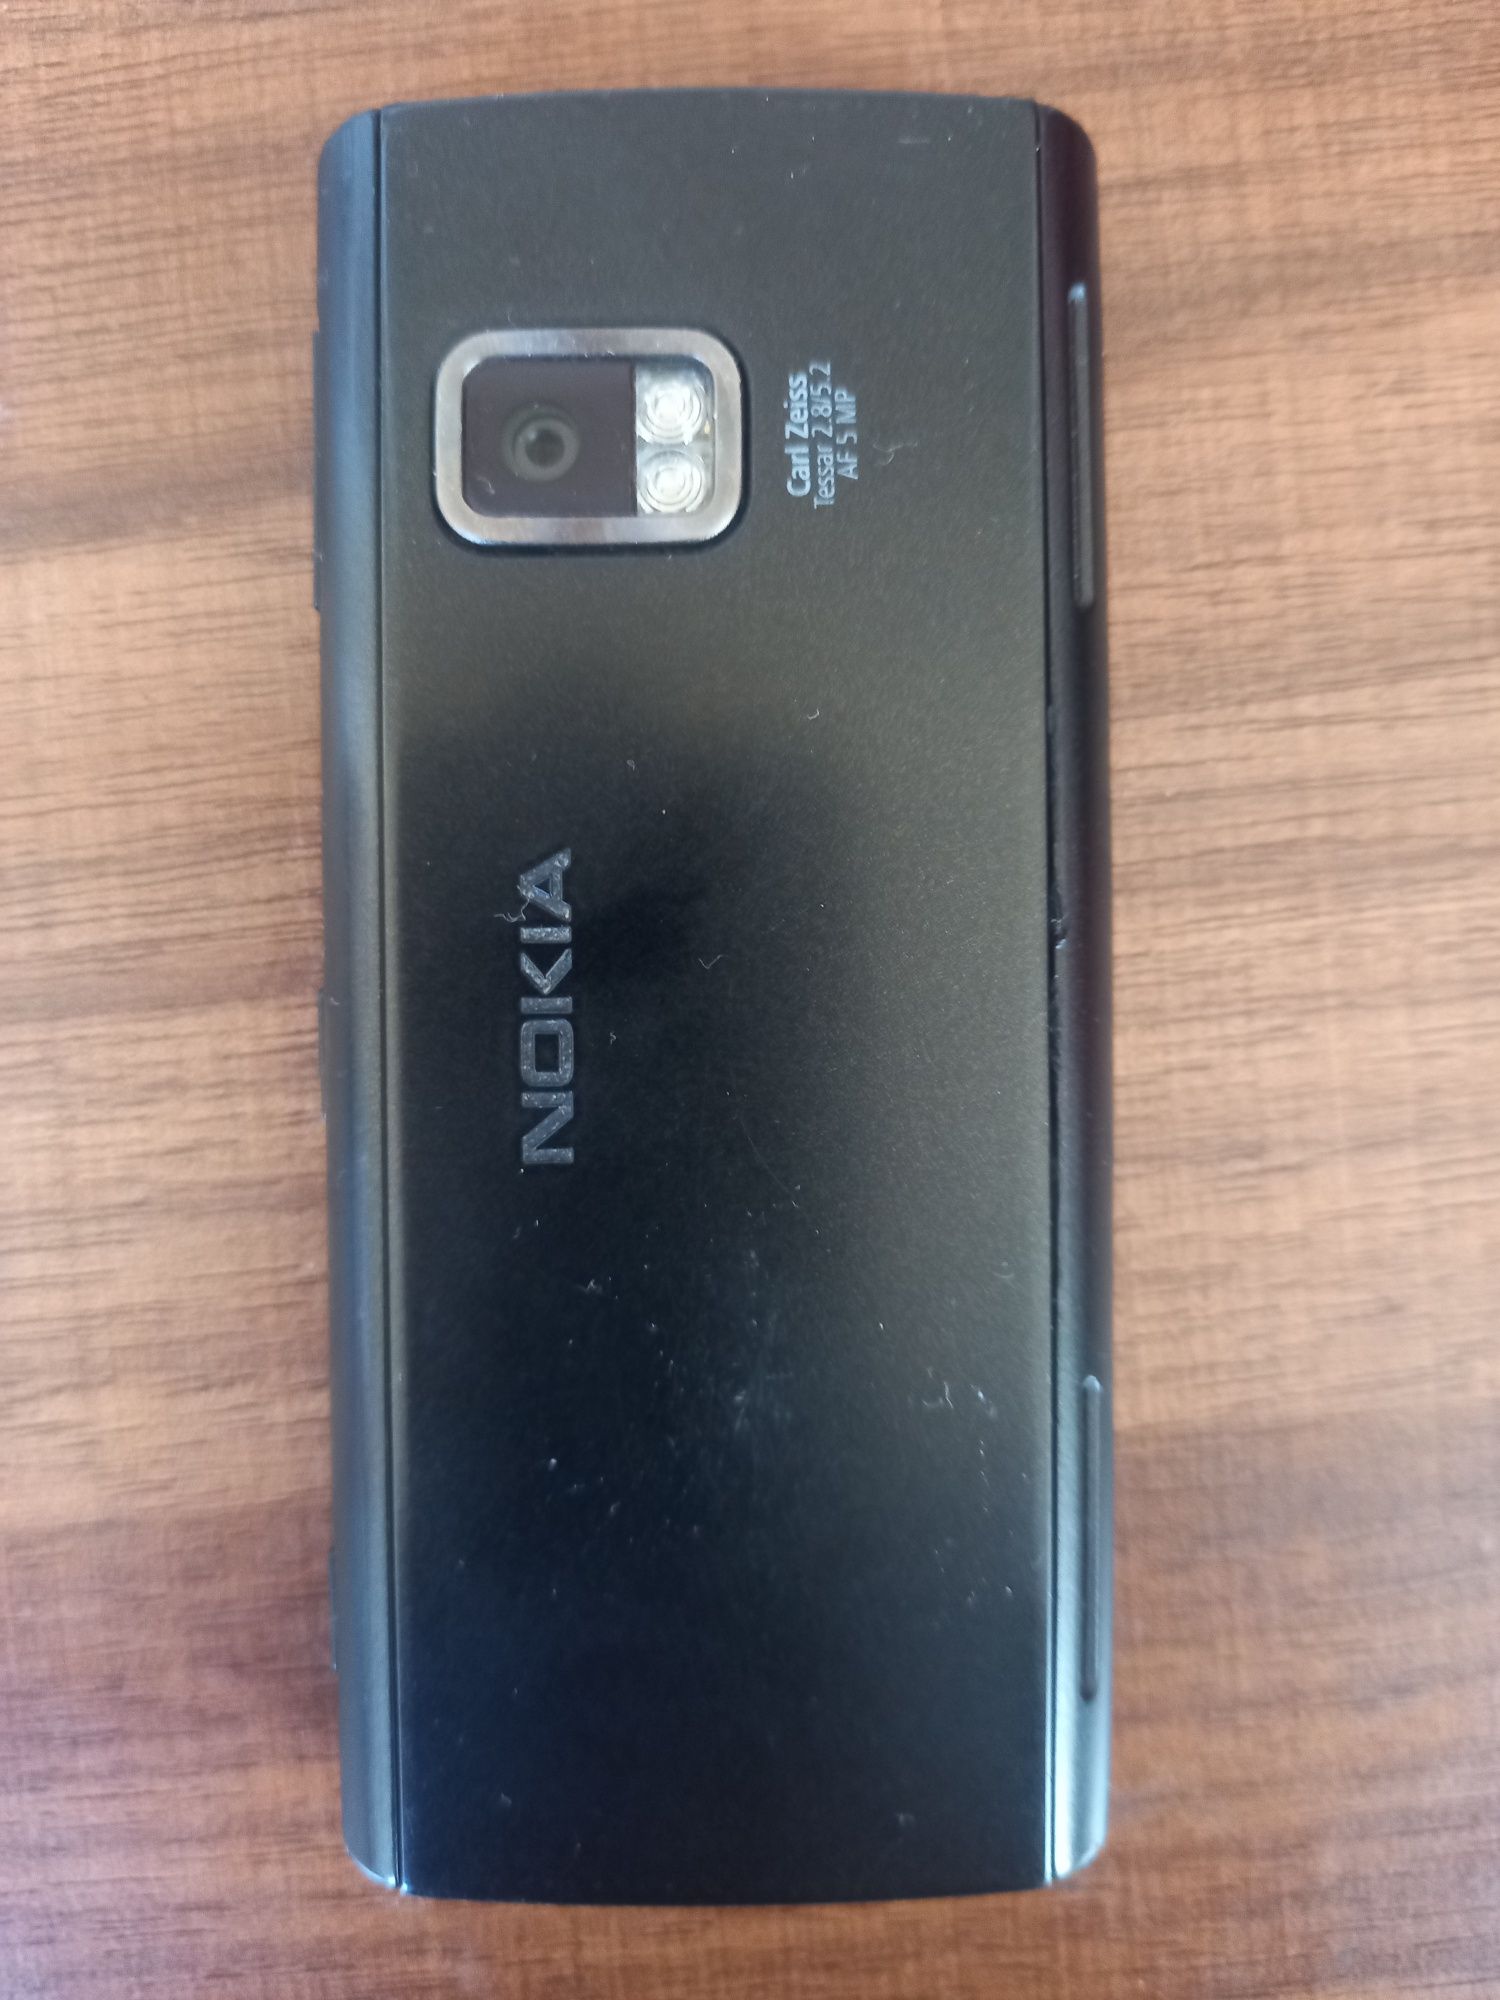 Телефон Nokia x6-00 Бг меню